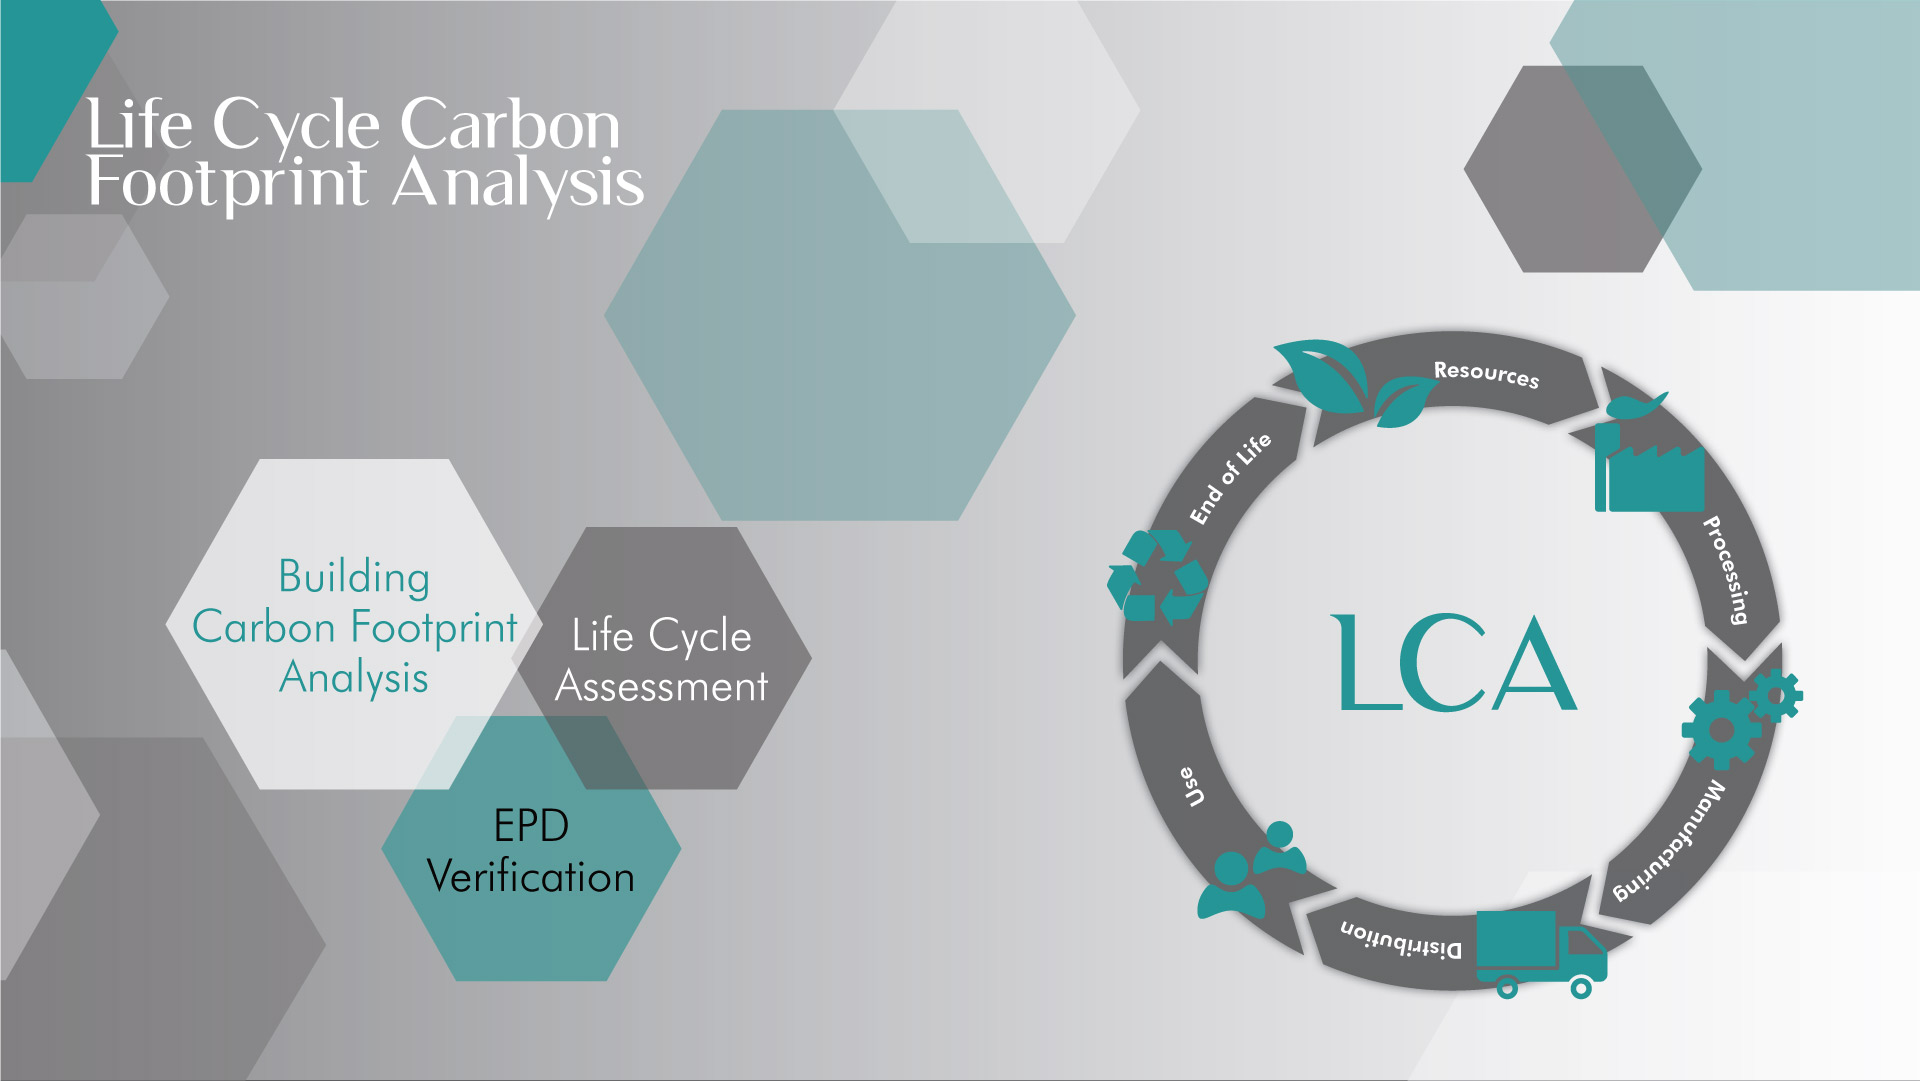 Life Cycle Carbon Footprint Analysis